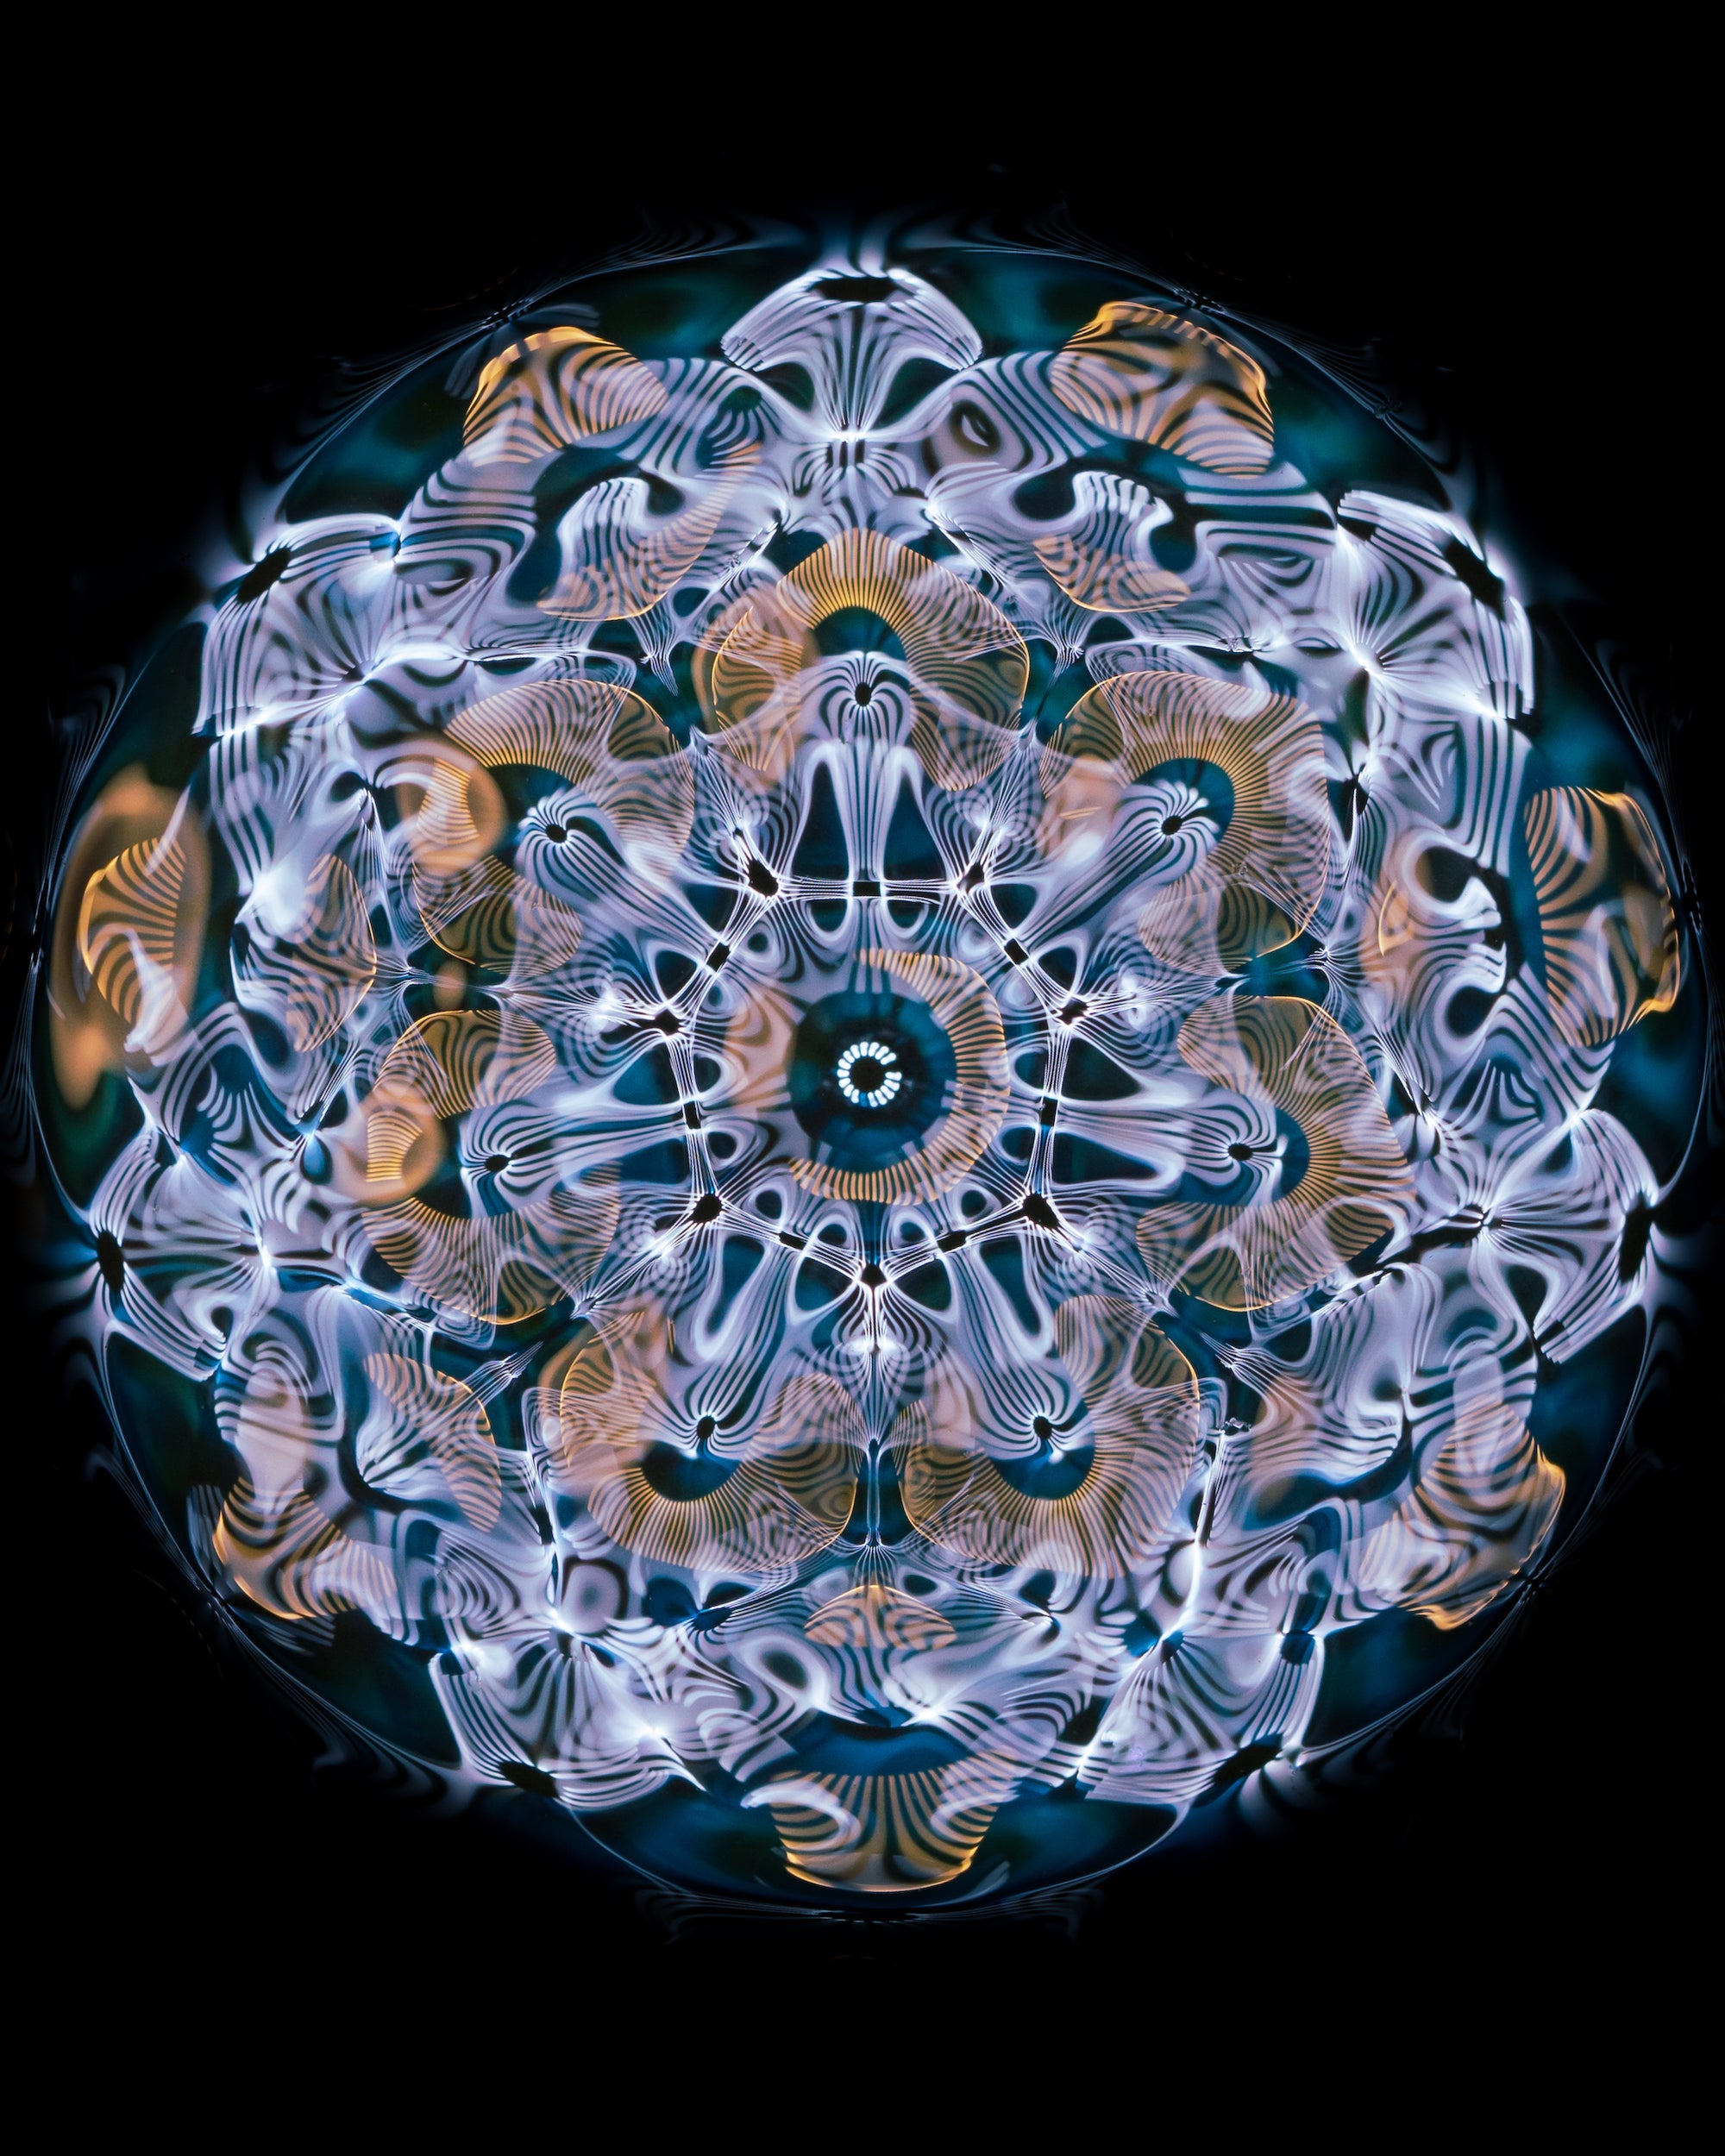 cymatics photo print 41.2Hz (Note E) - Journey of Curiosity